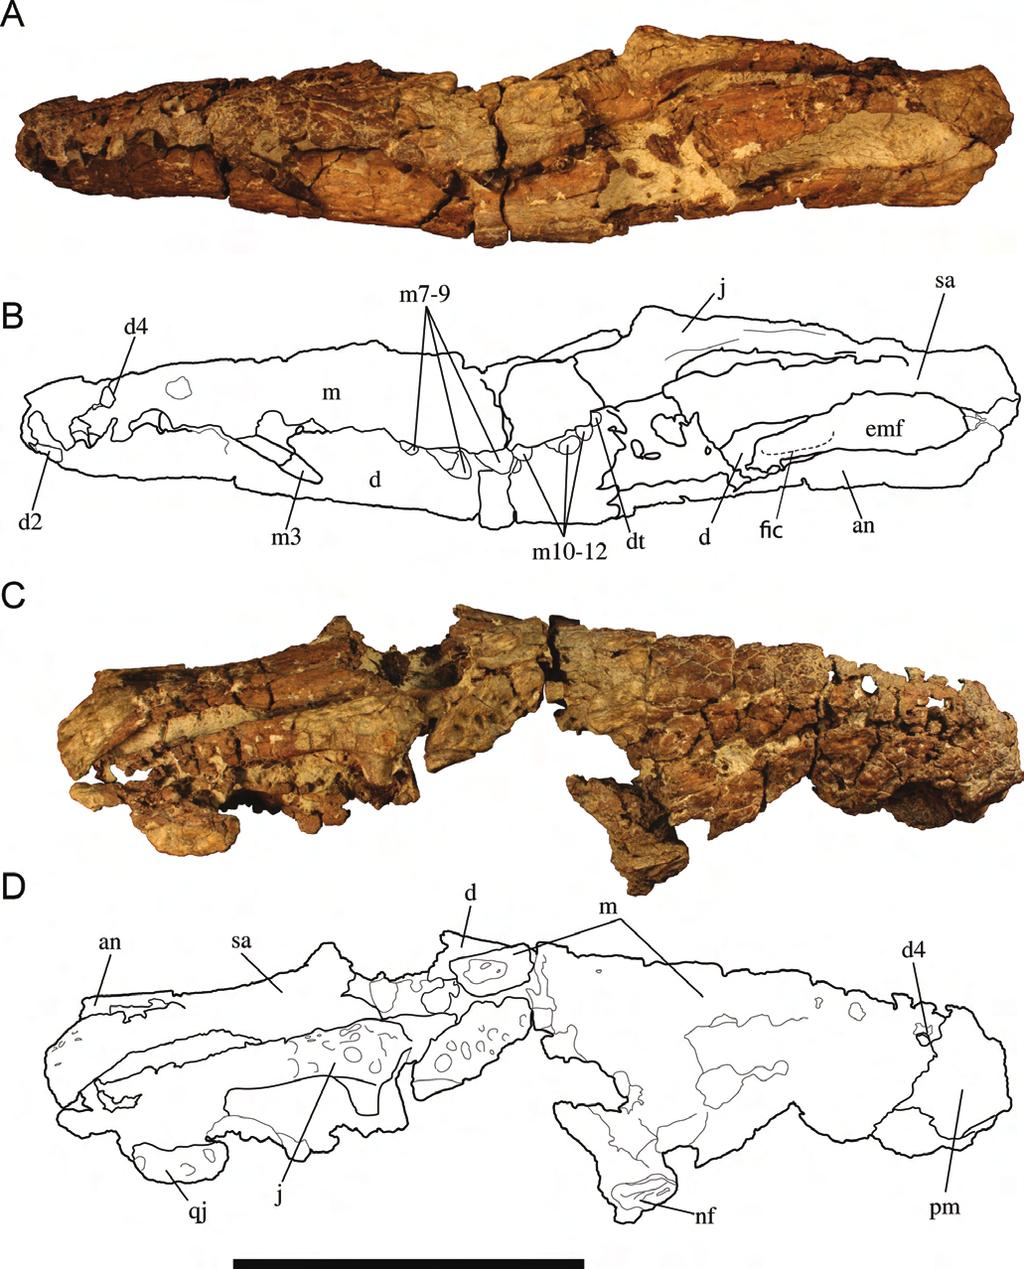 241 HASTINGS ET AL. FOSSIL CROCODYLIANS OF PANAMA FIGURE 2. Holotype of Culebrasuchus mesoamericanus, gen. et sp. nov. (UF 244434), from the early Miocene Culebra Formation of Panama.